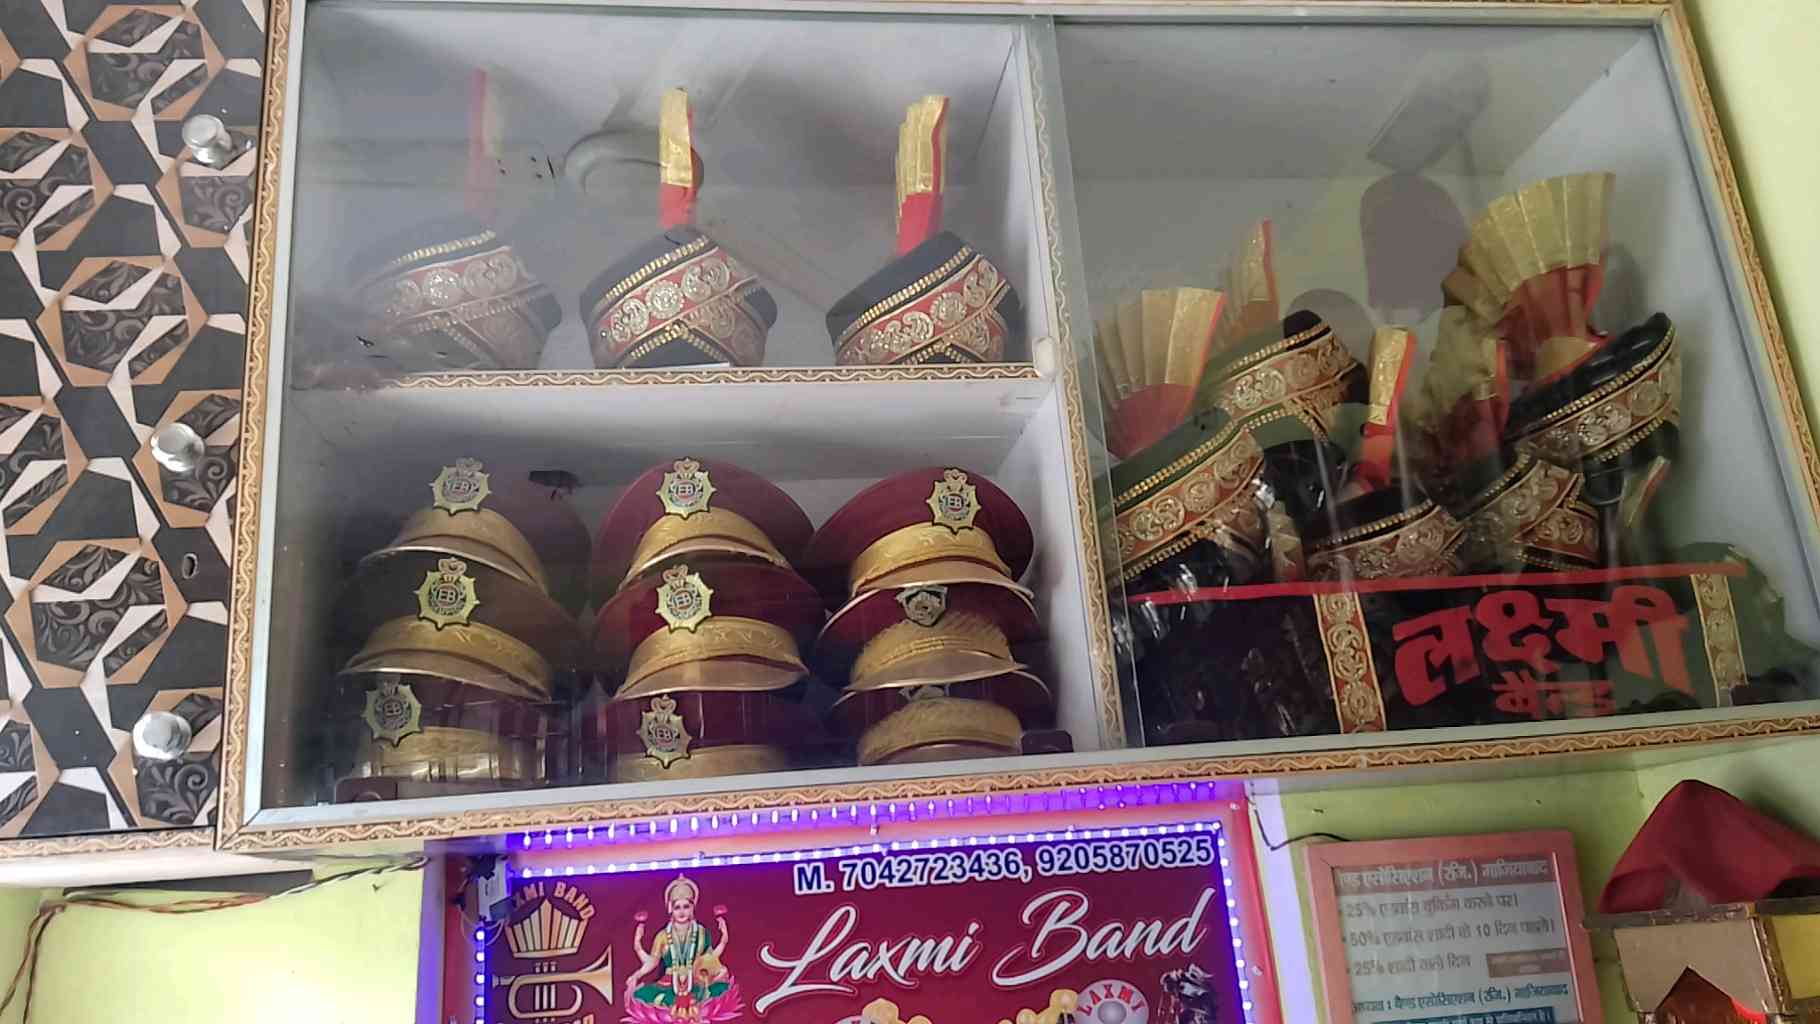 Laxmi Band